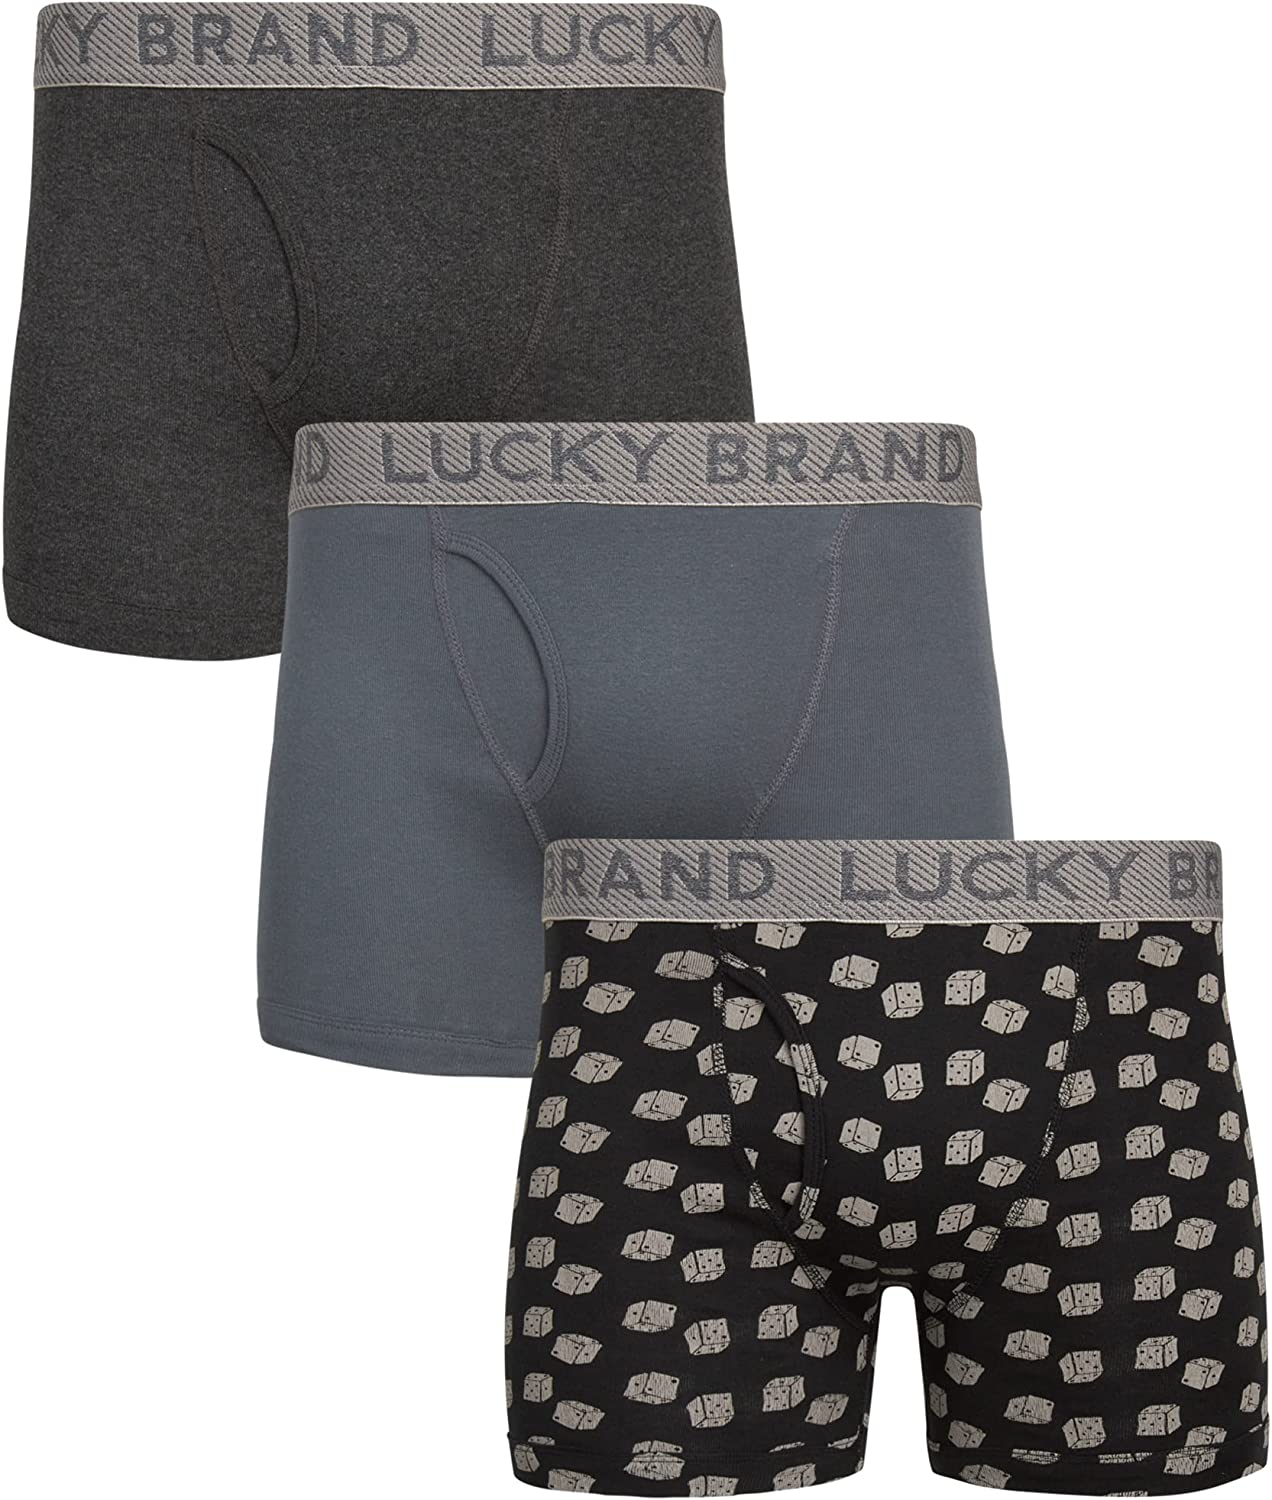  Lucky & Me Boys Underwear, Boxers Style 100% Cotton